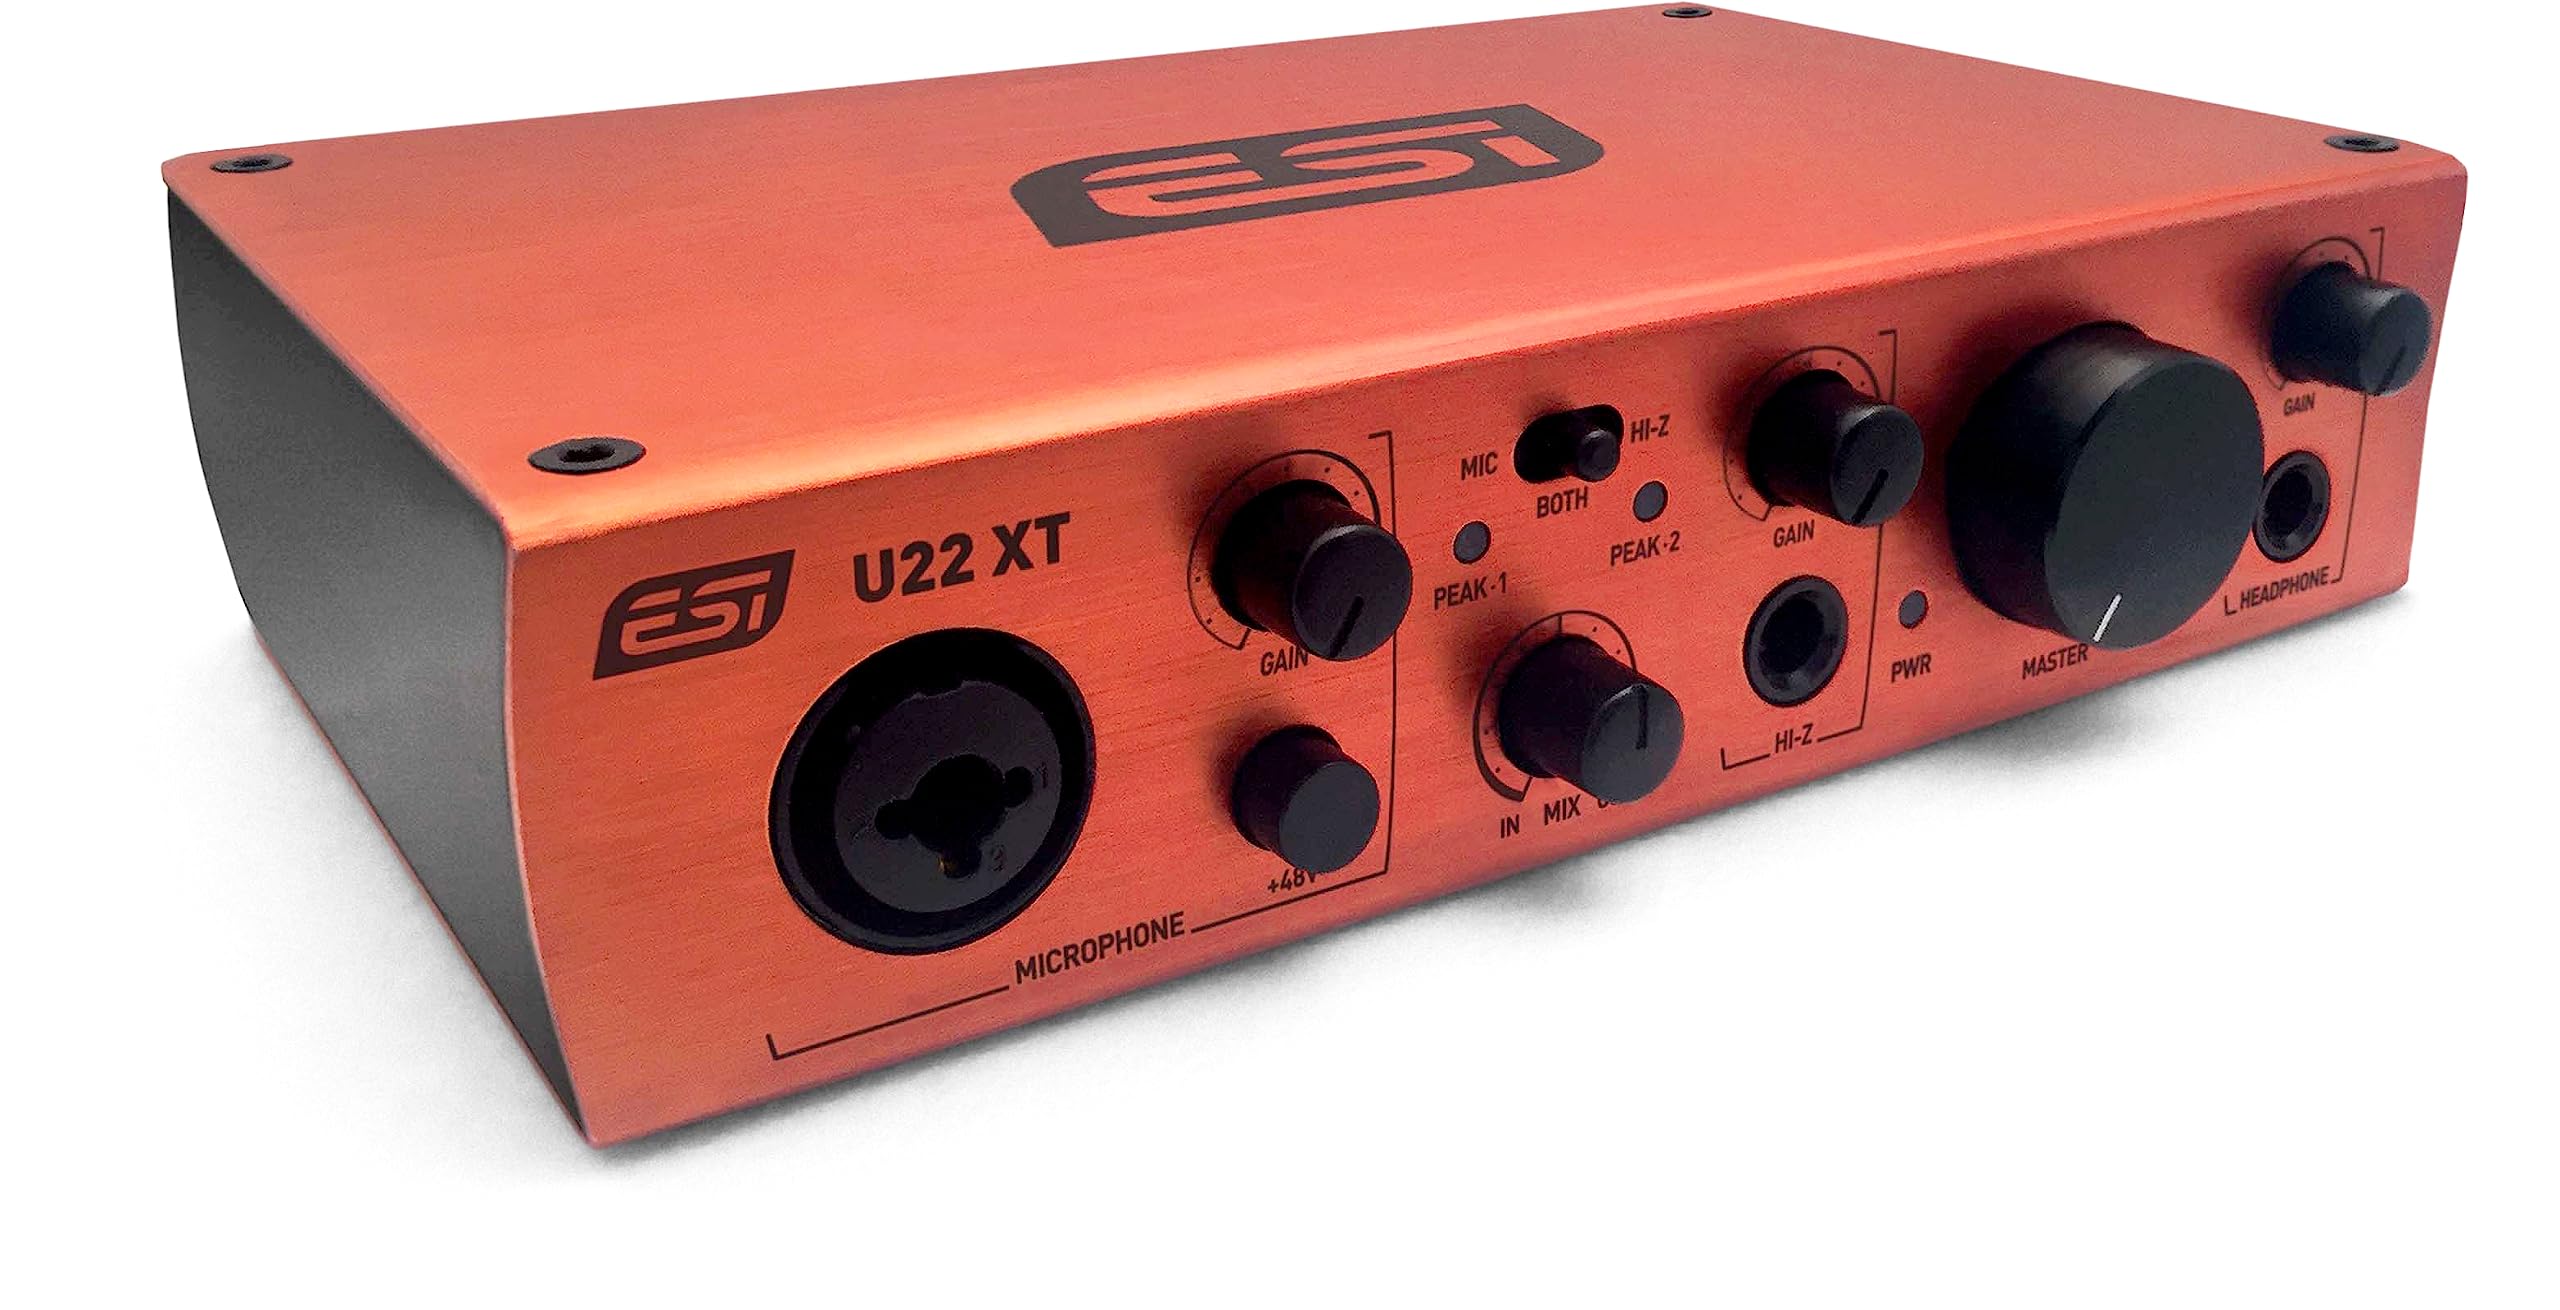 grand escompte ESI U22 XT USB Audio Interface Xx0ZSjagv frais